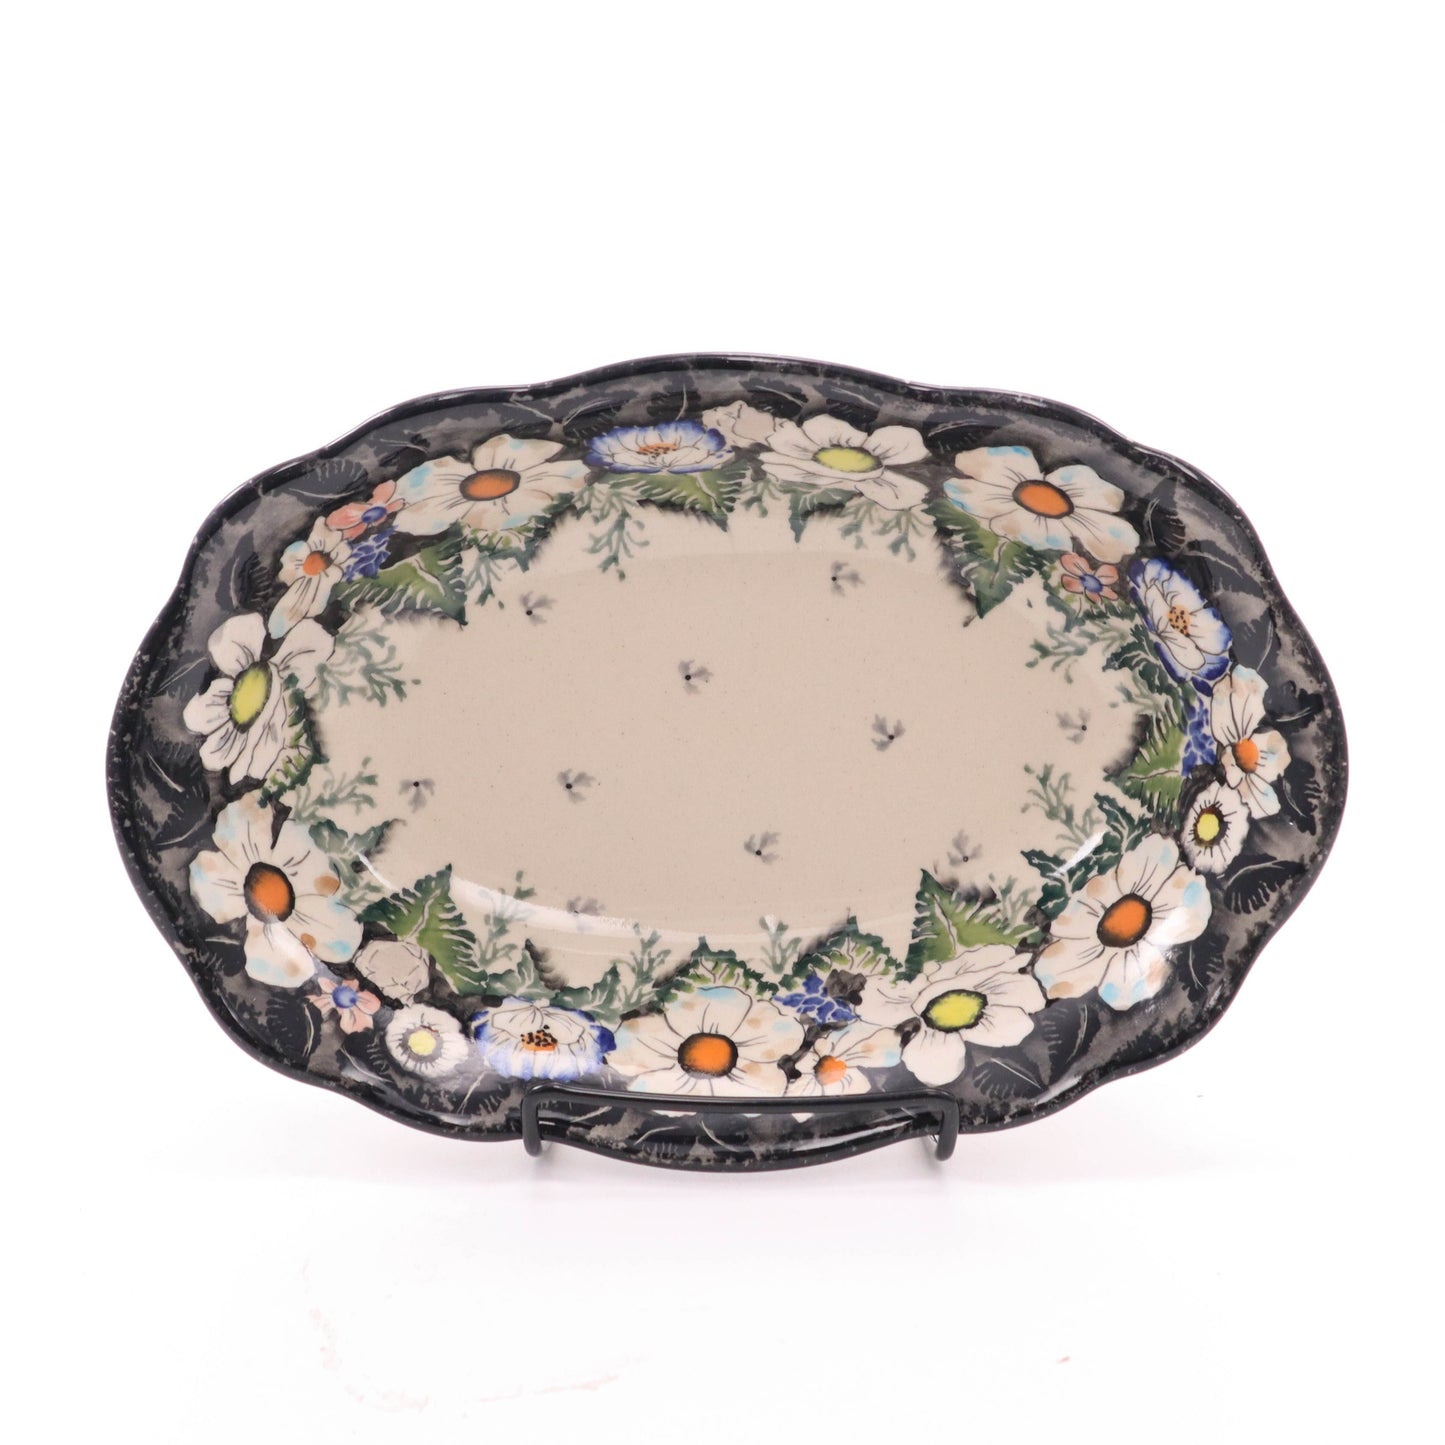 10"x7" Oval Waved Dish. Pattern: Midnight Lace